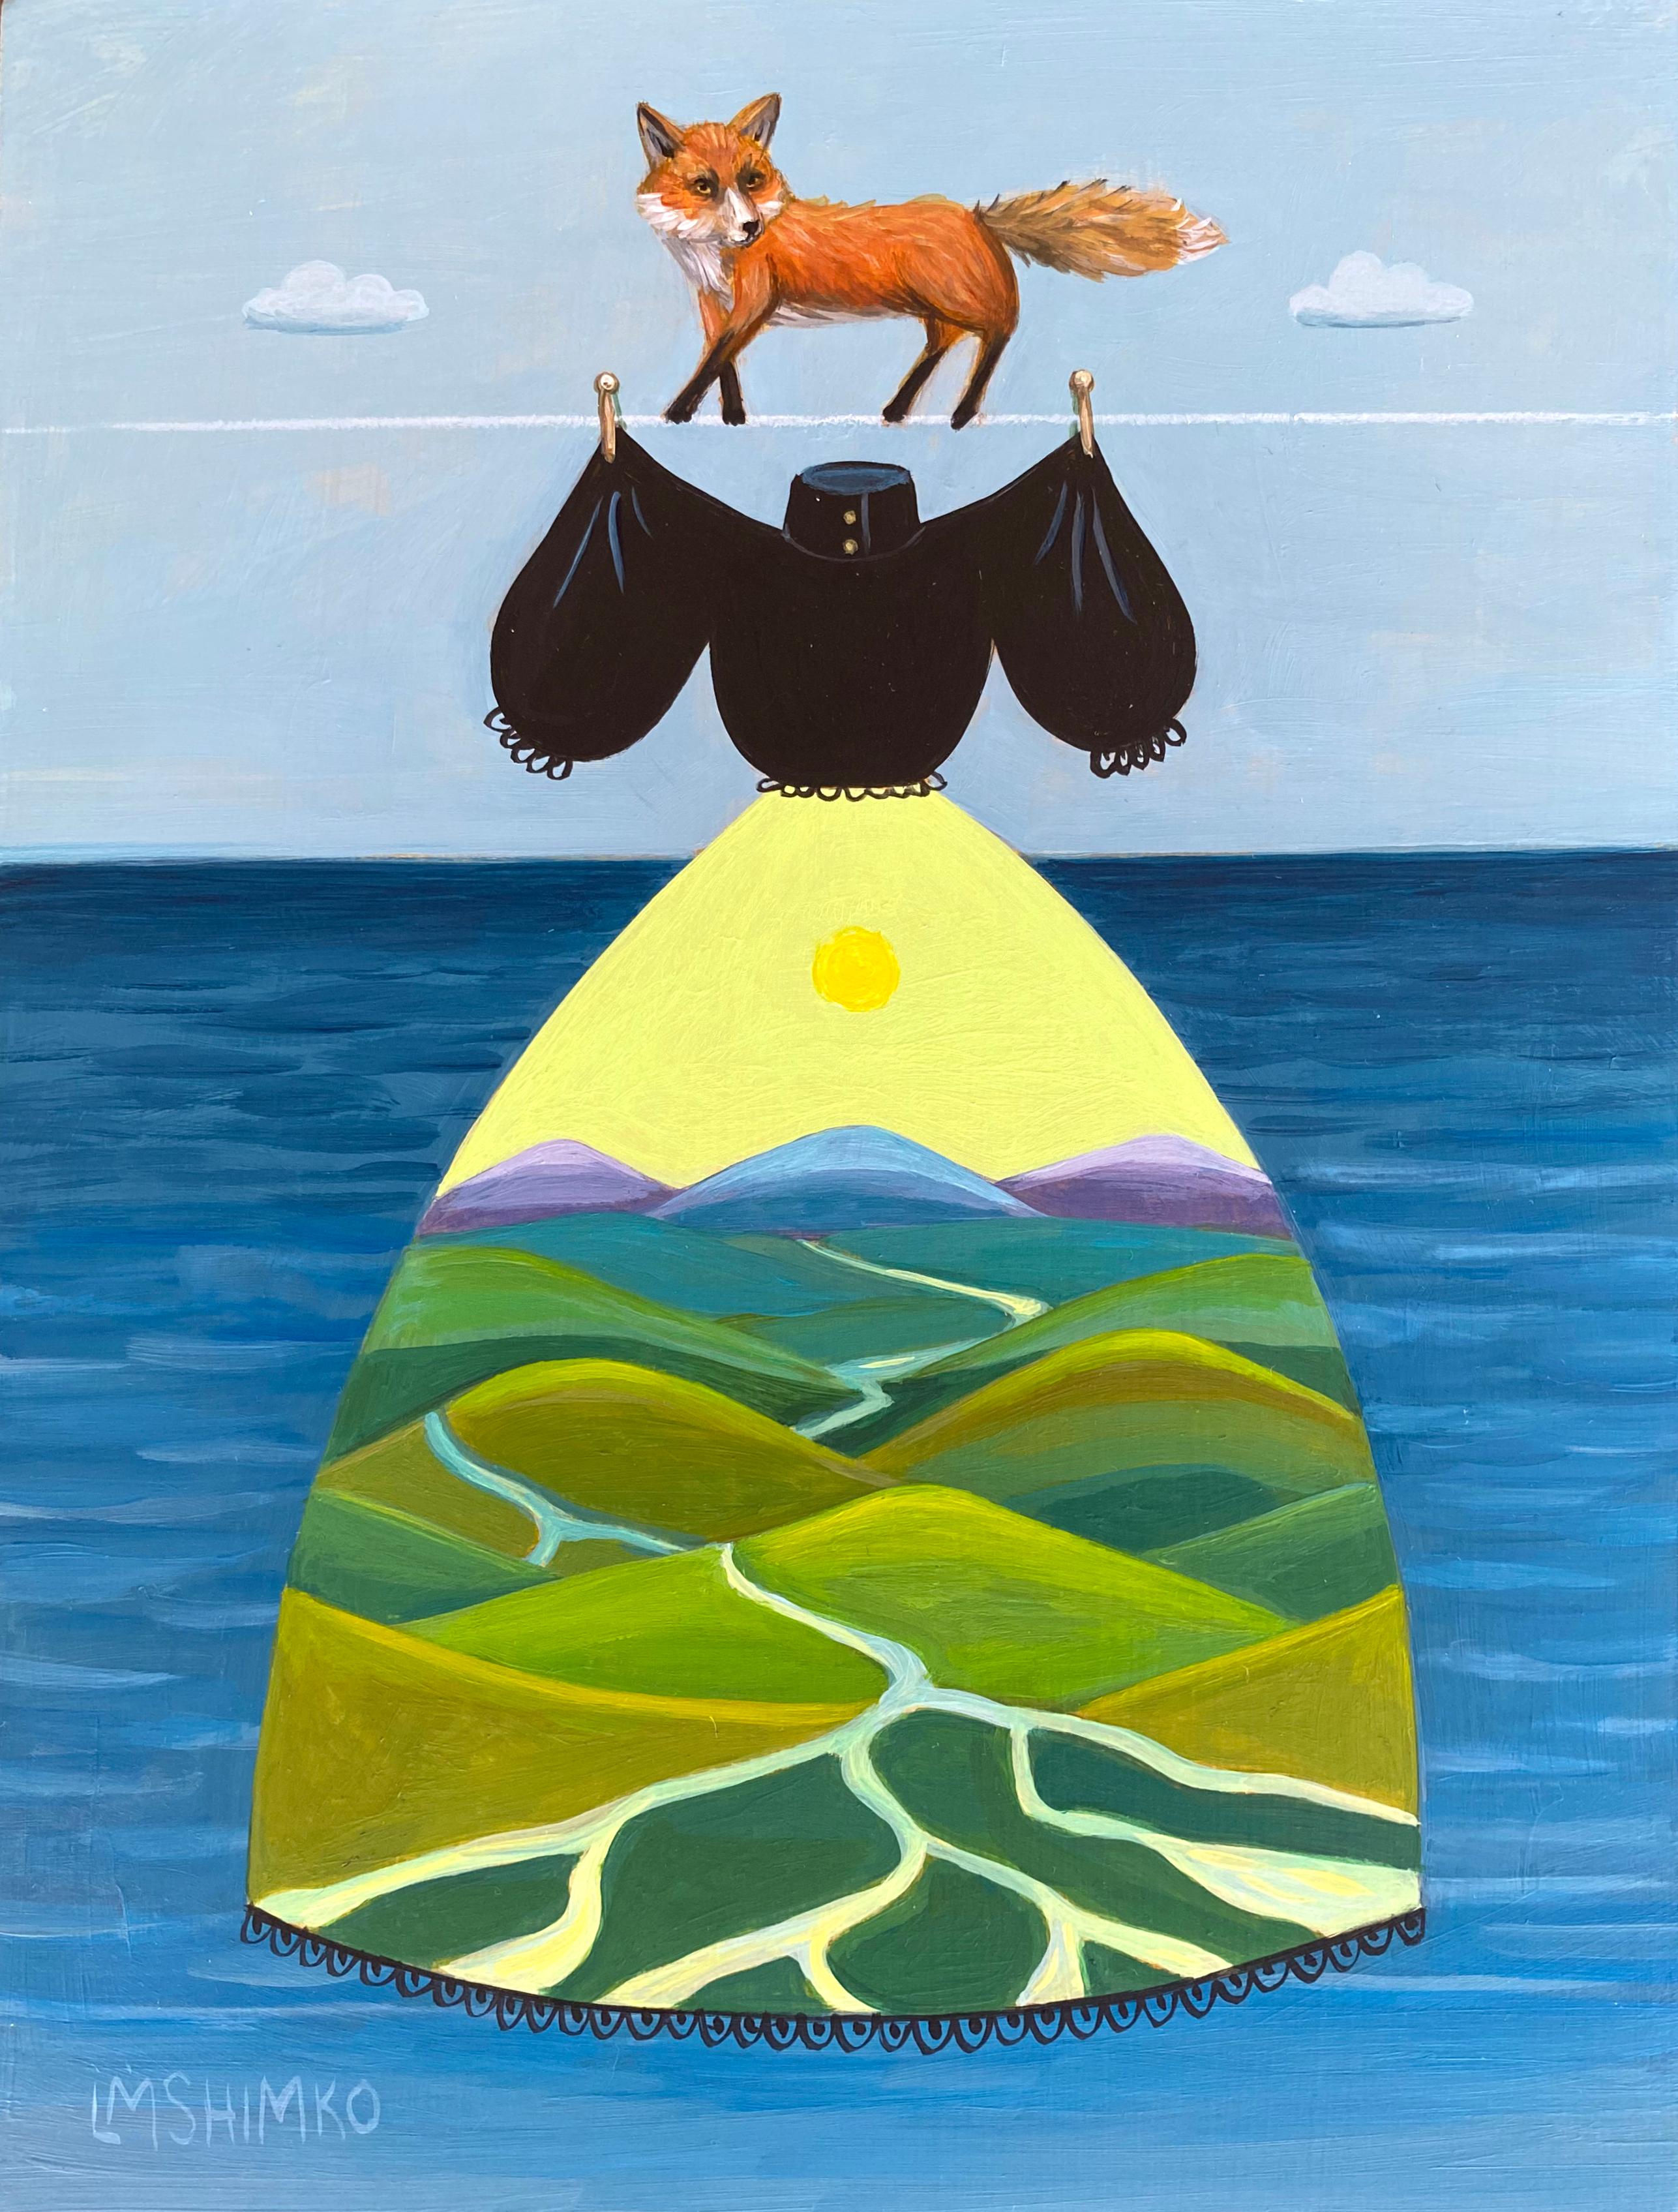 Lisa Shimko Landscape Painting - Mourning Dress Fox, Mountains, Sea